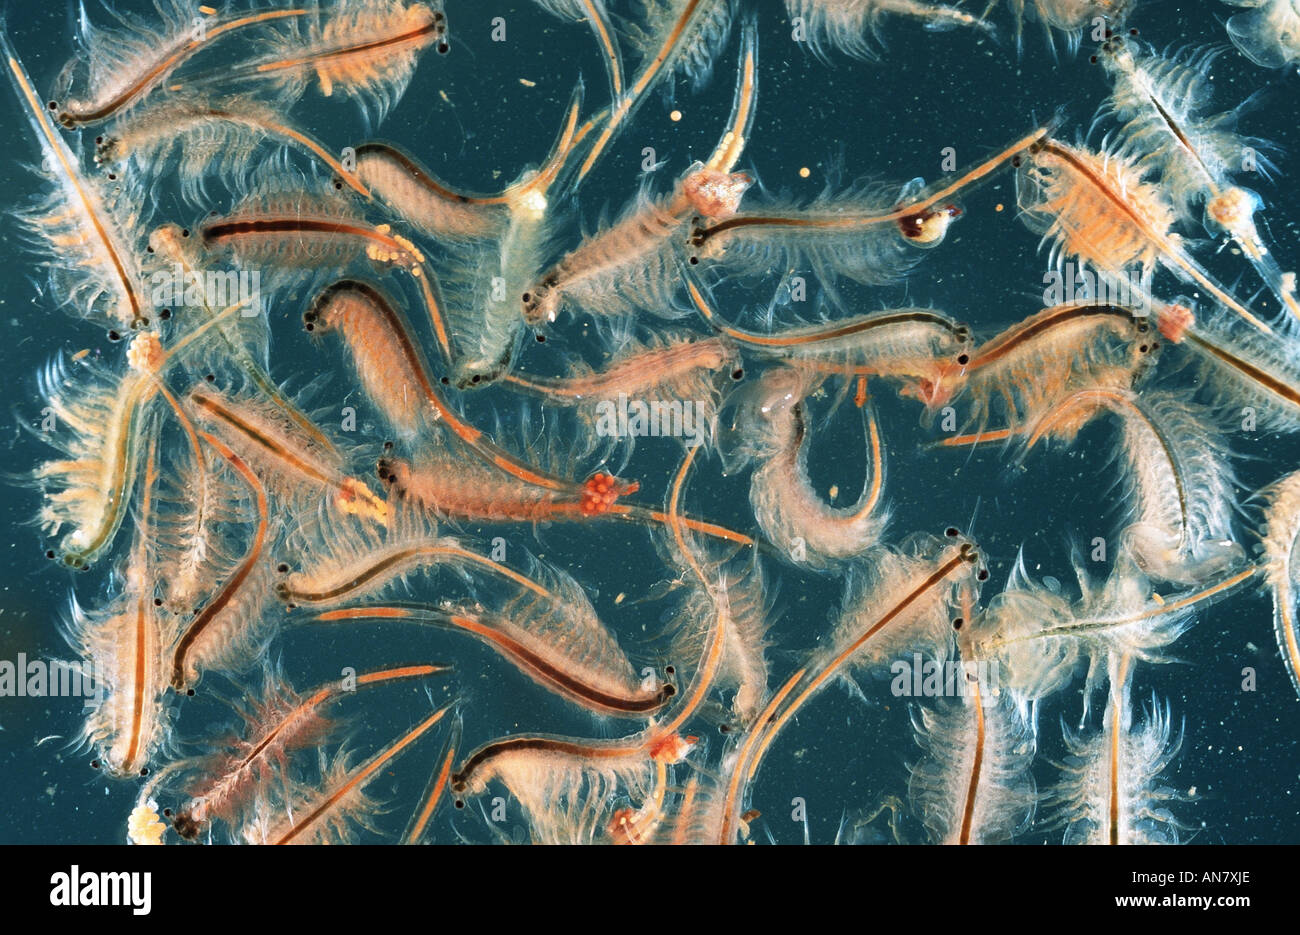 Brine shrimp artemia salina hi-res stock photography and images - Alamy